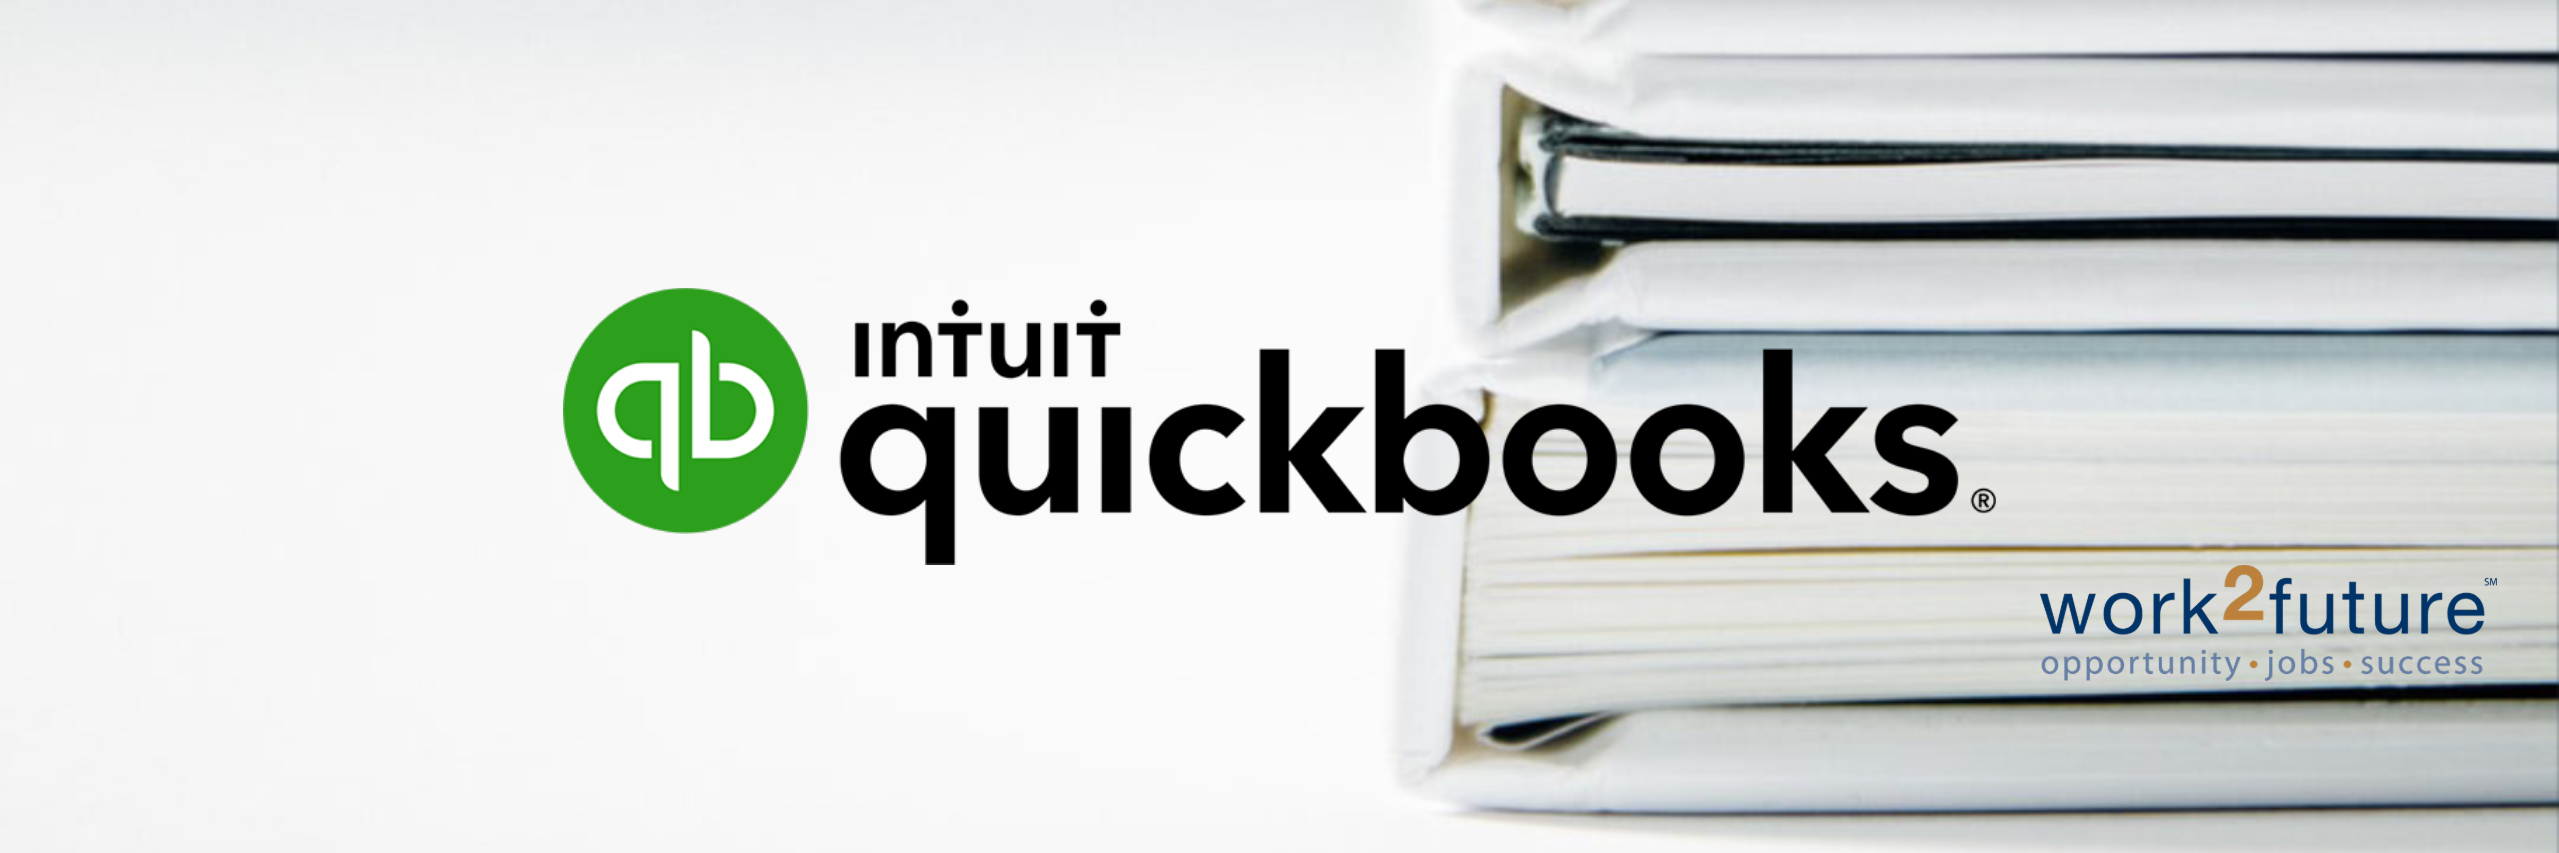 quickbooks workshop